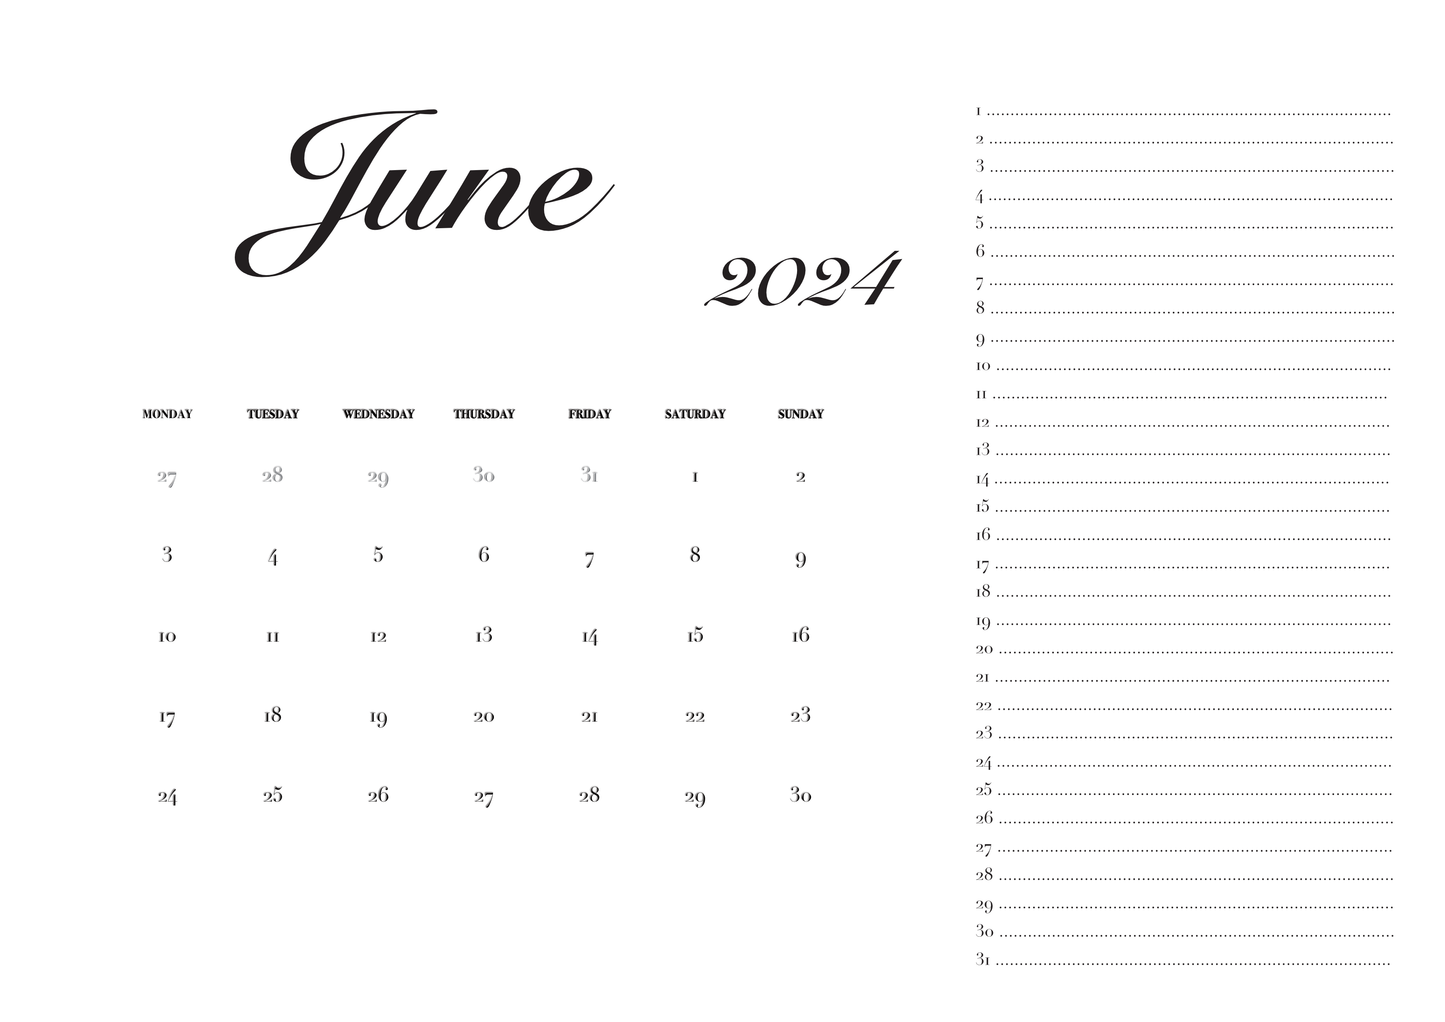 2024 Free Printable Calendar